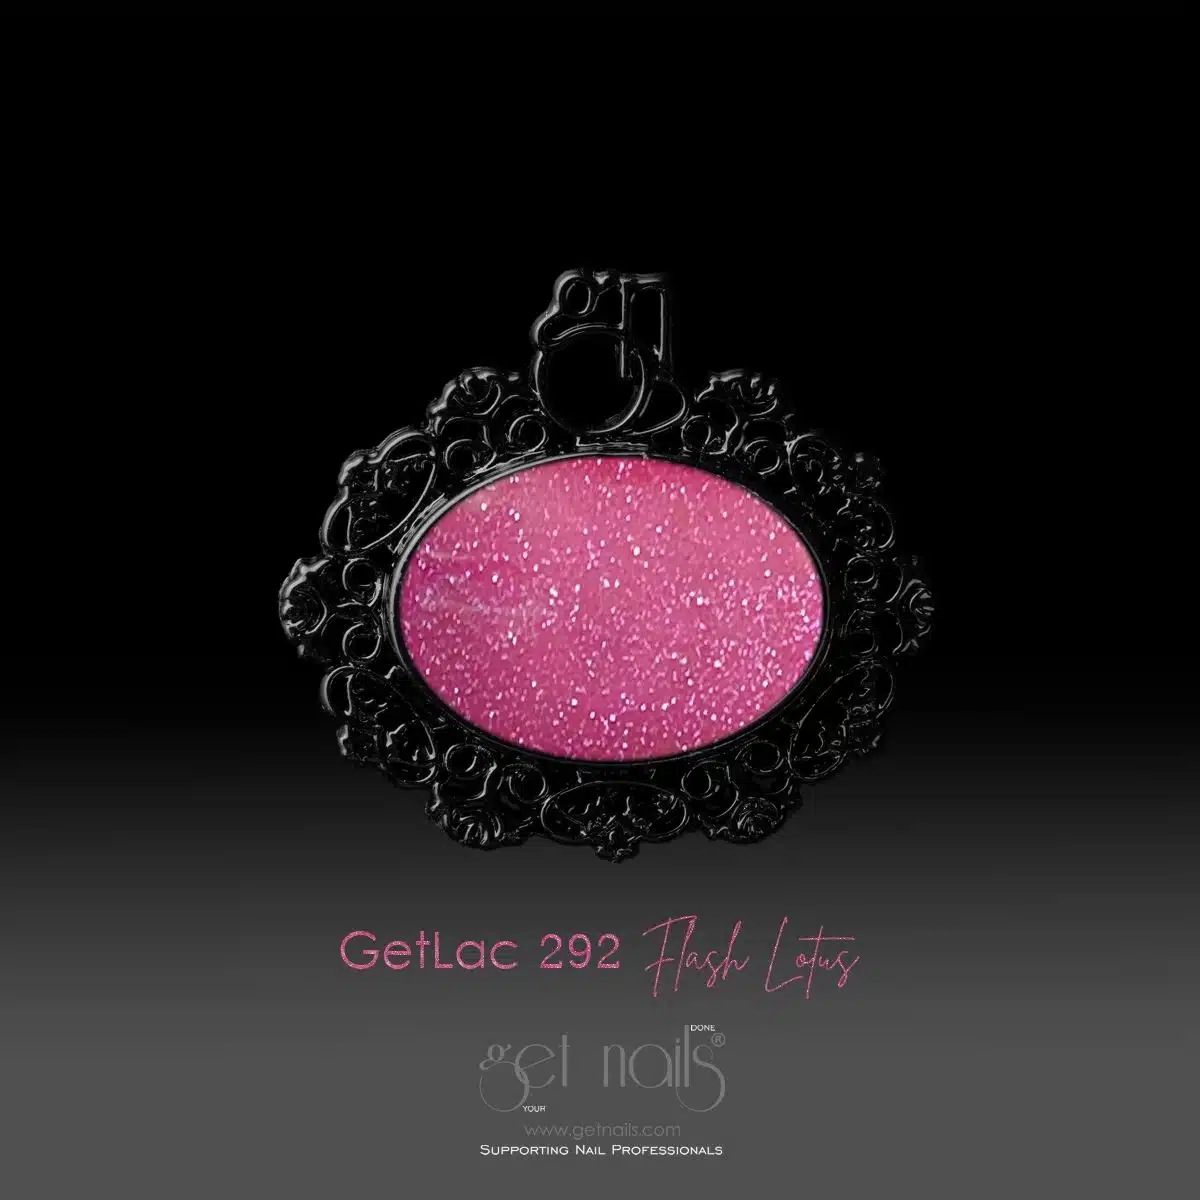 Ottieni Nails Austria - GetLac 292 Flash Lotus 15g